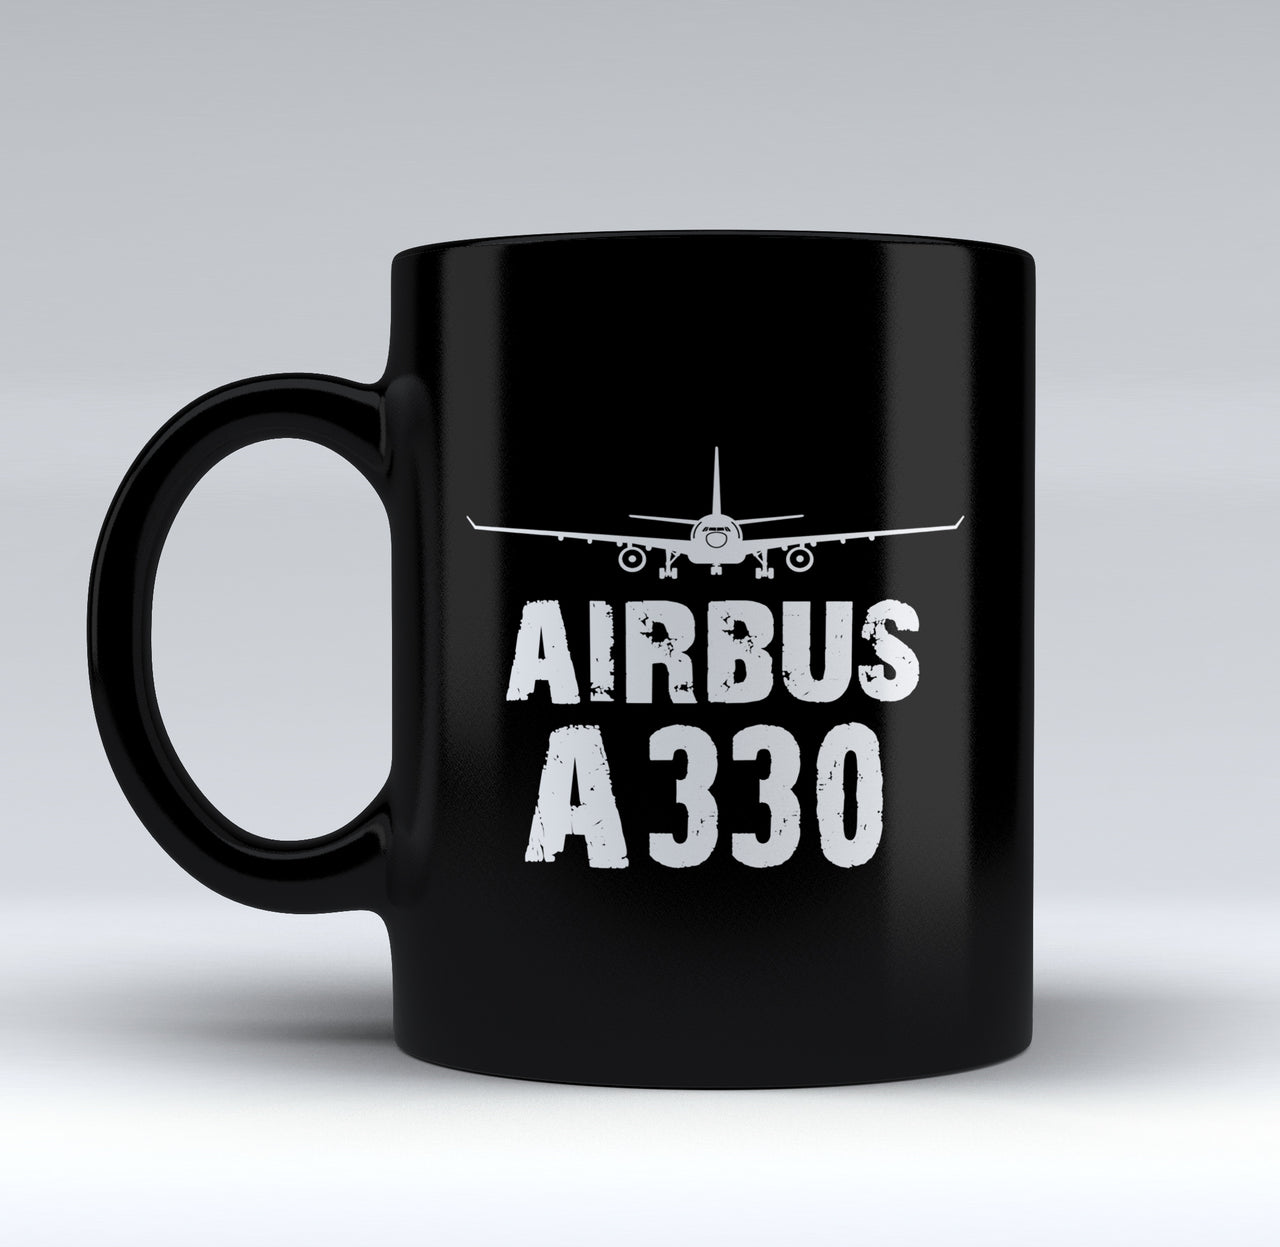 Airbus A330 & Plane Designed Black Mugs